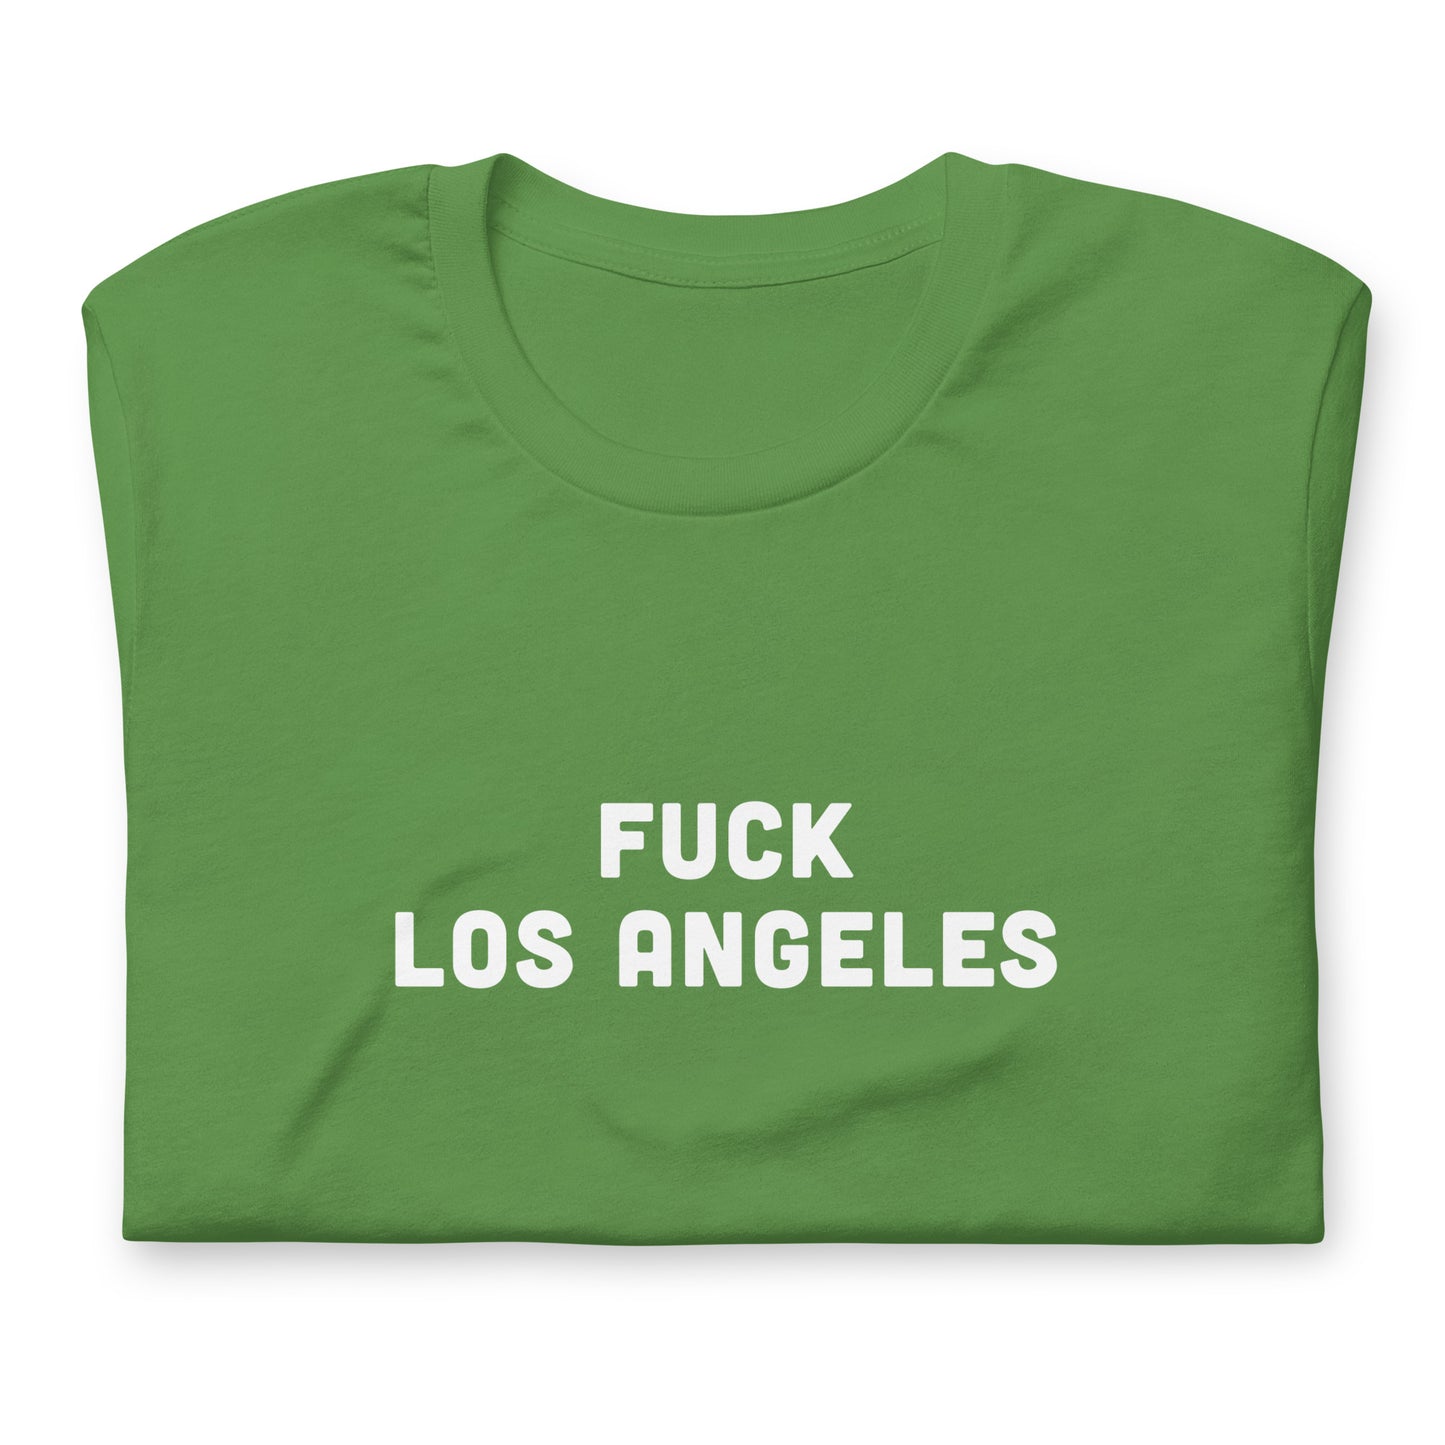 Fuck Los Angeles T-Shirt Size M Color Forest